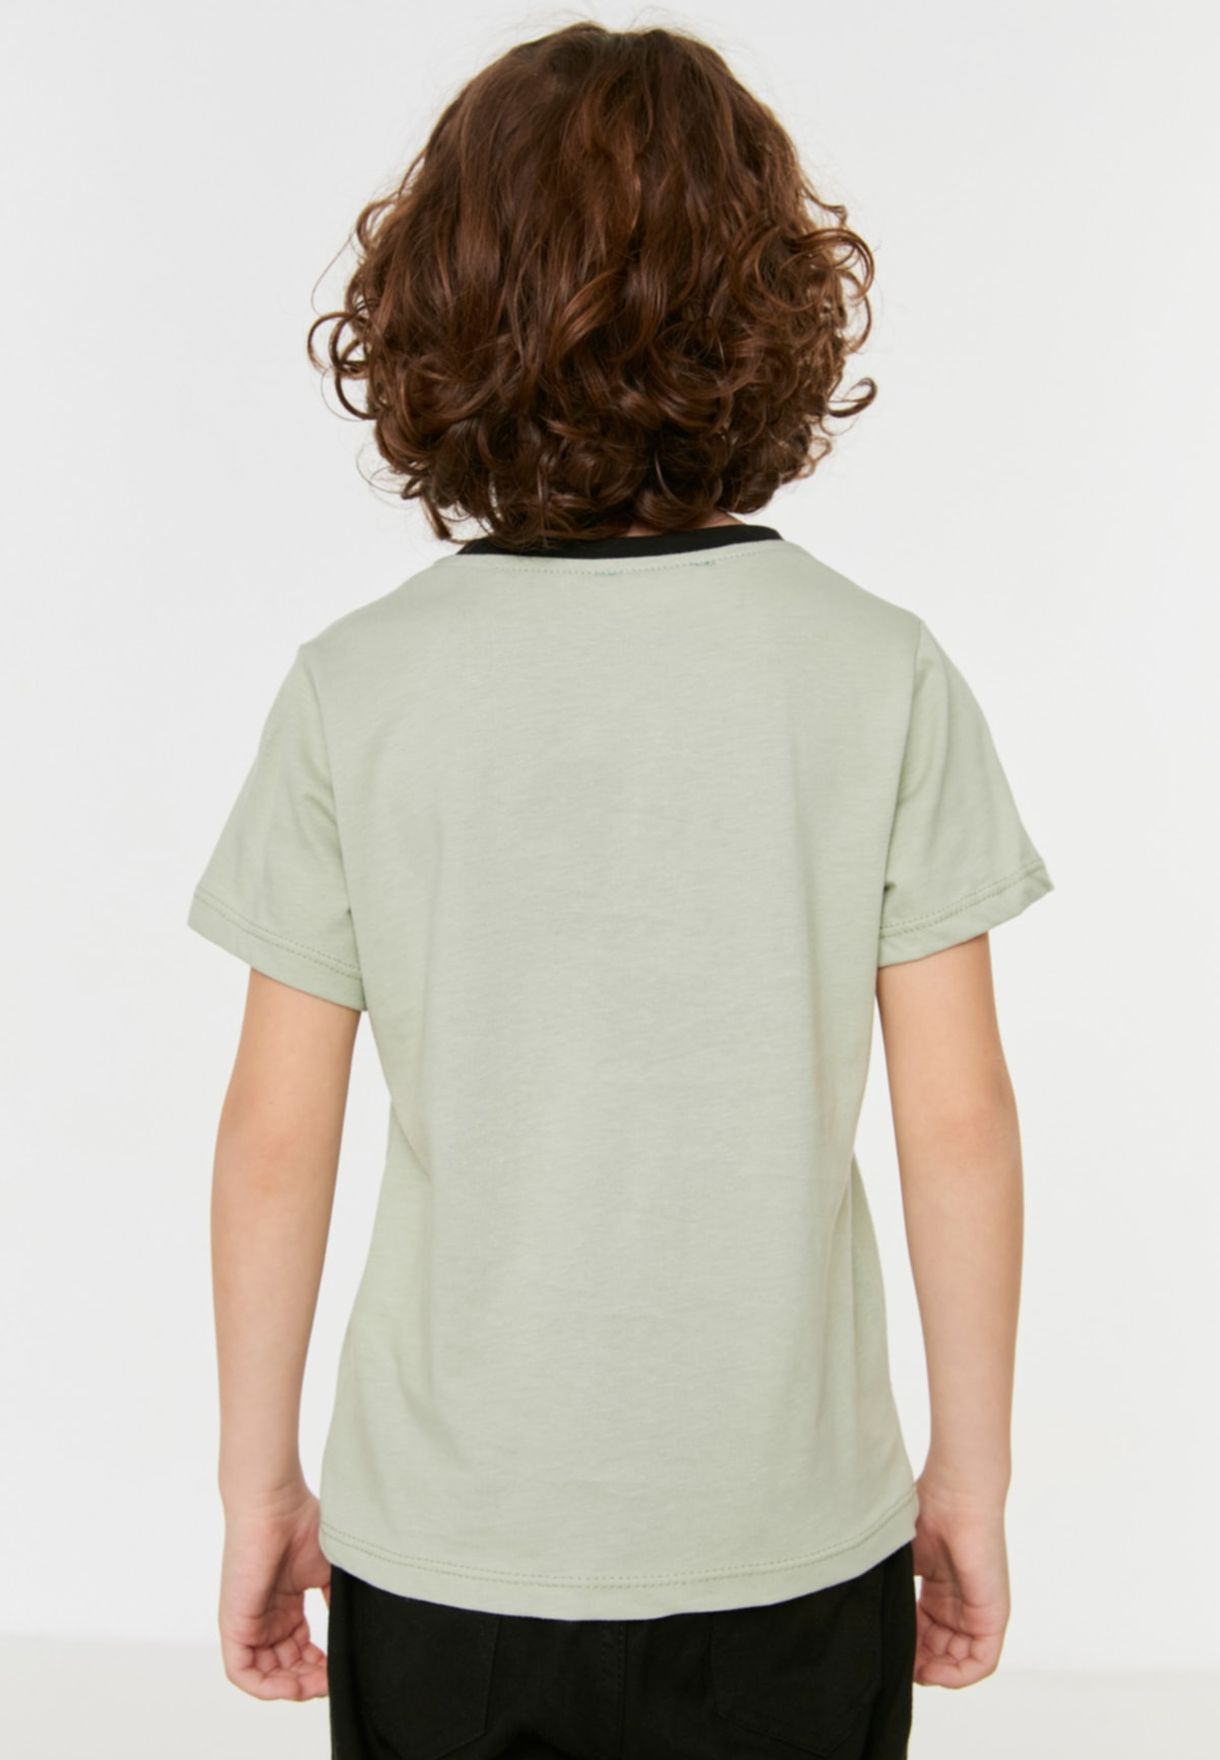 Kids Sequined T-Shirt